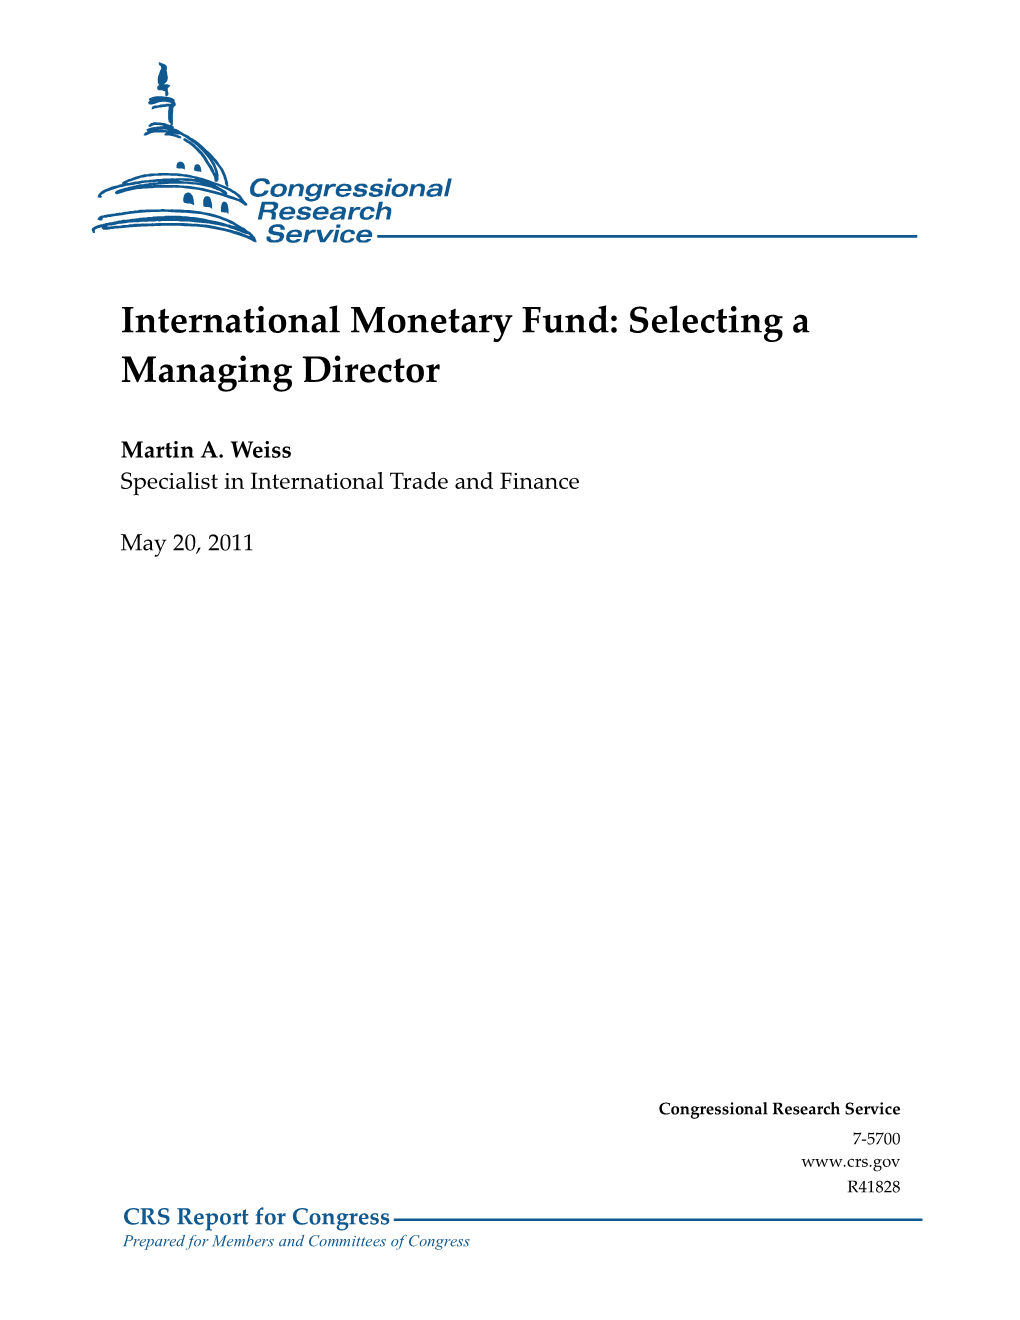 International Monetary Fund: Selecting a Managing Director